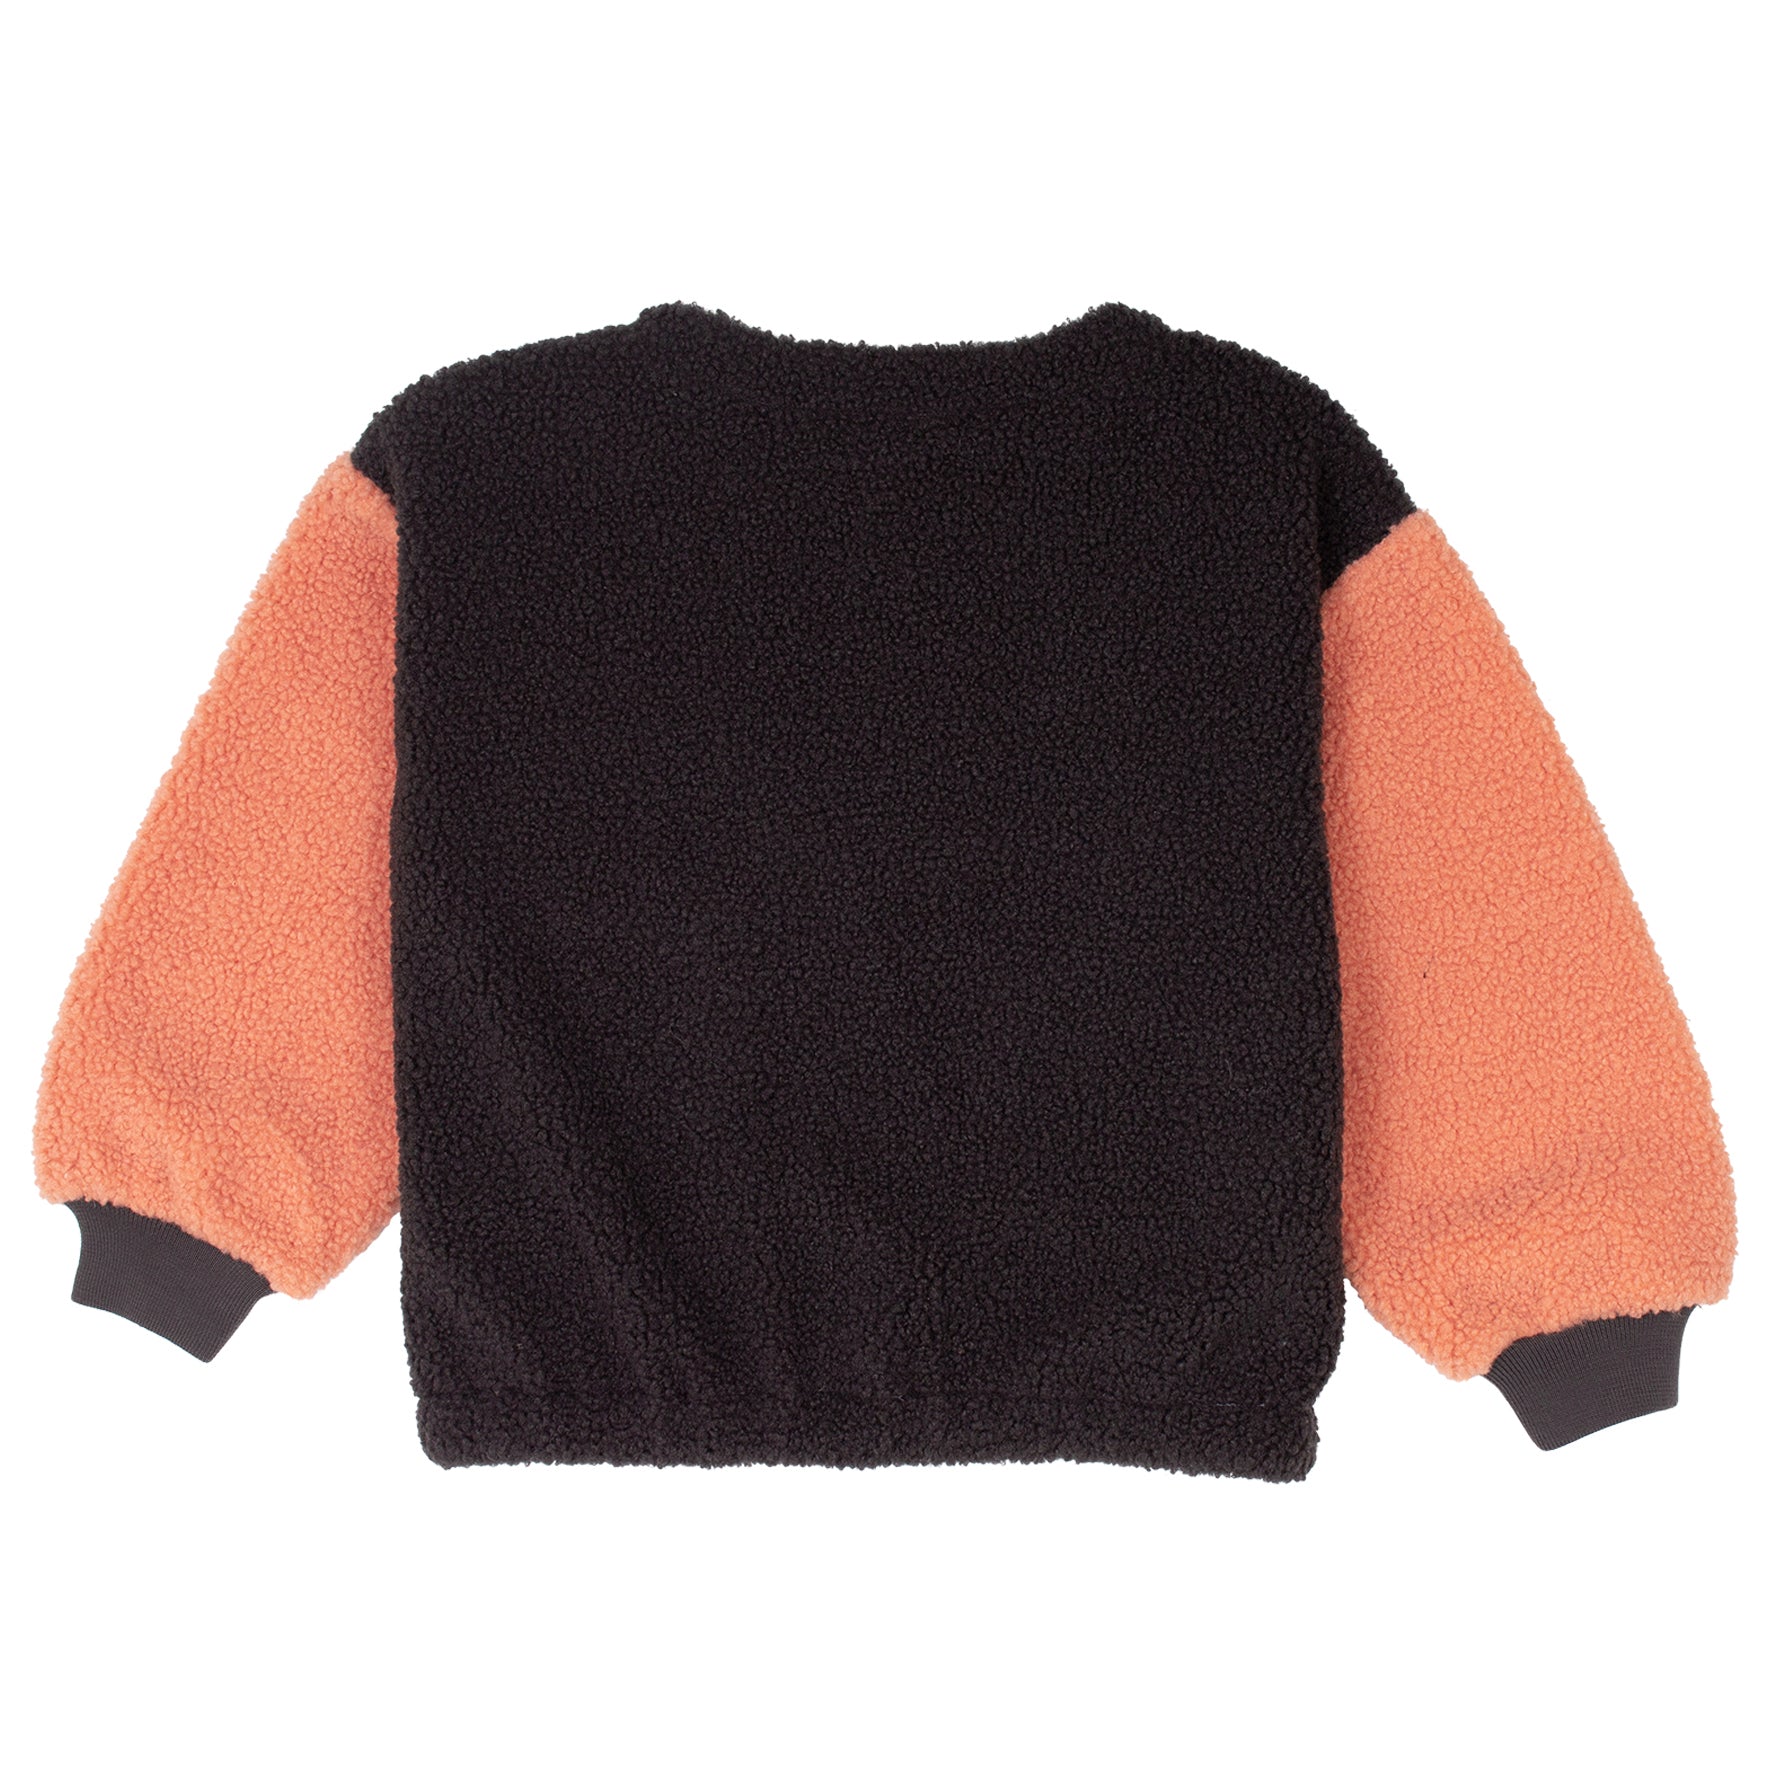 Cresta Jacket - Peach / Charcoal